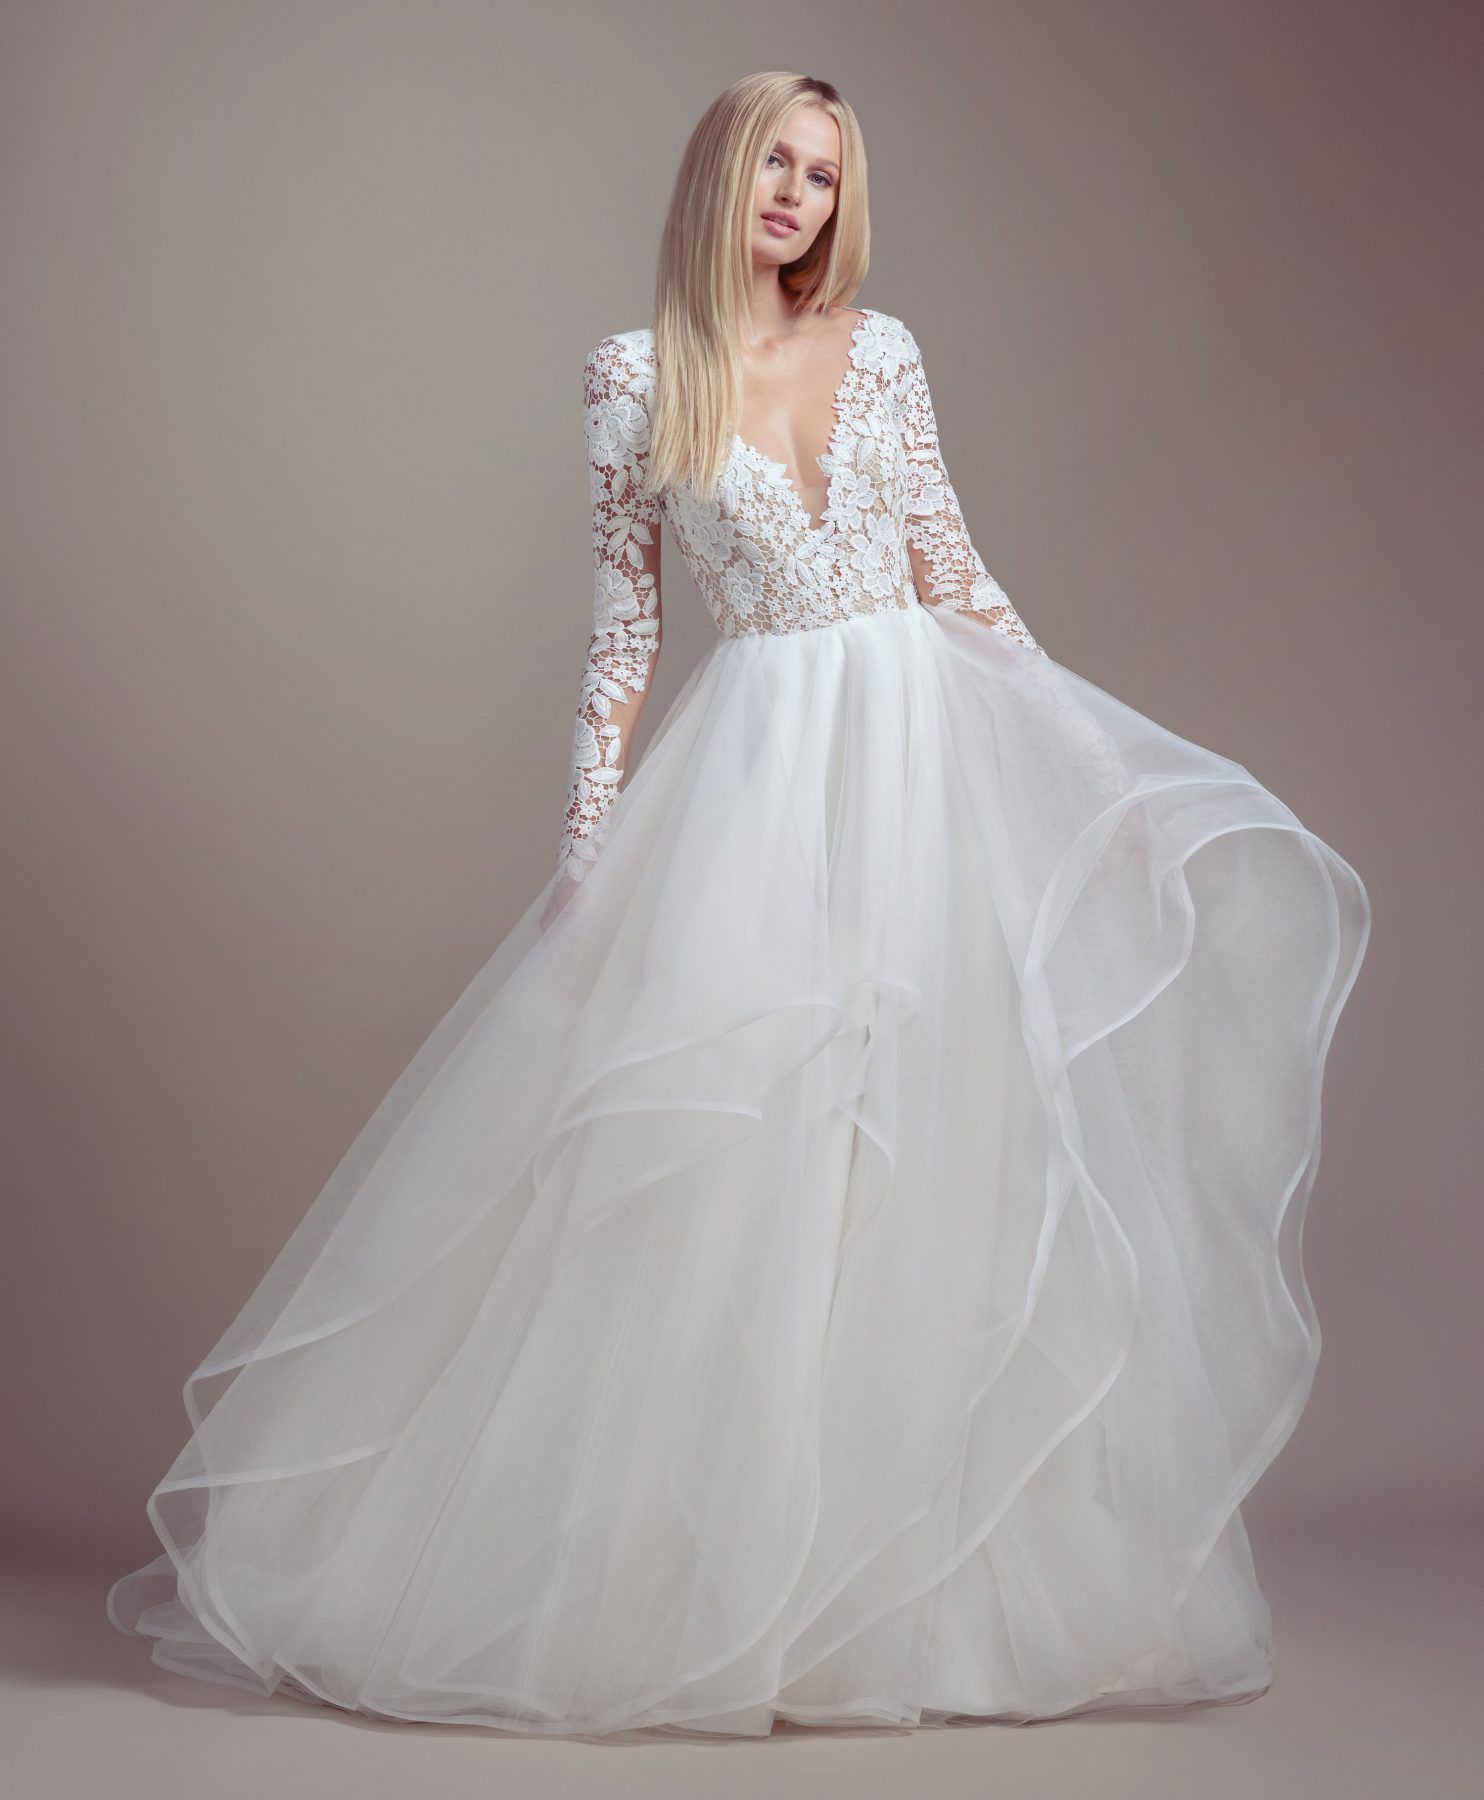 Lace Bodice Long Sleeve Ball Gown Wedding Dress -   14 blush wedding Gown ideas